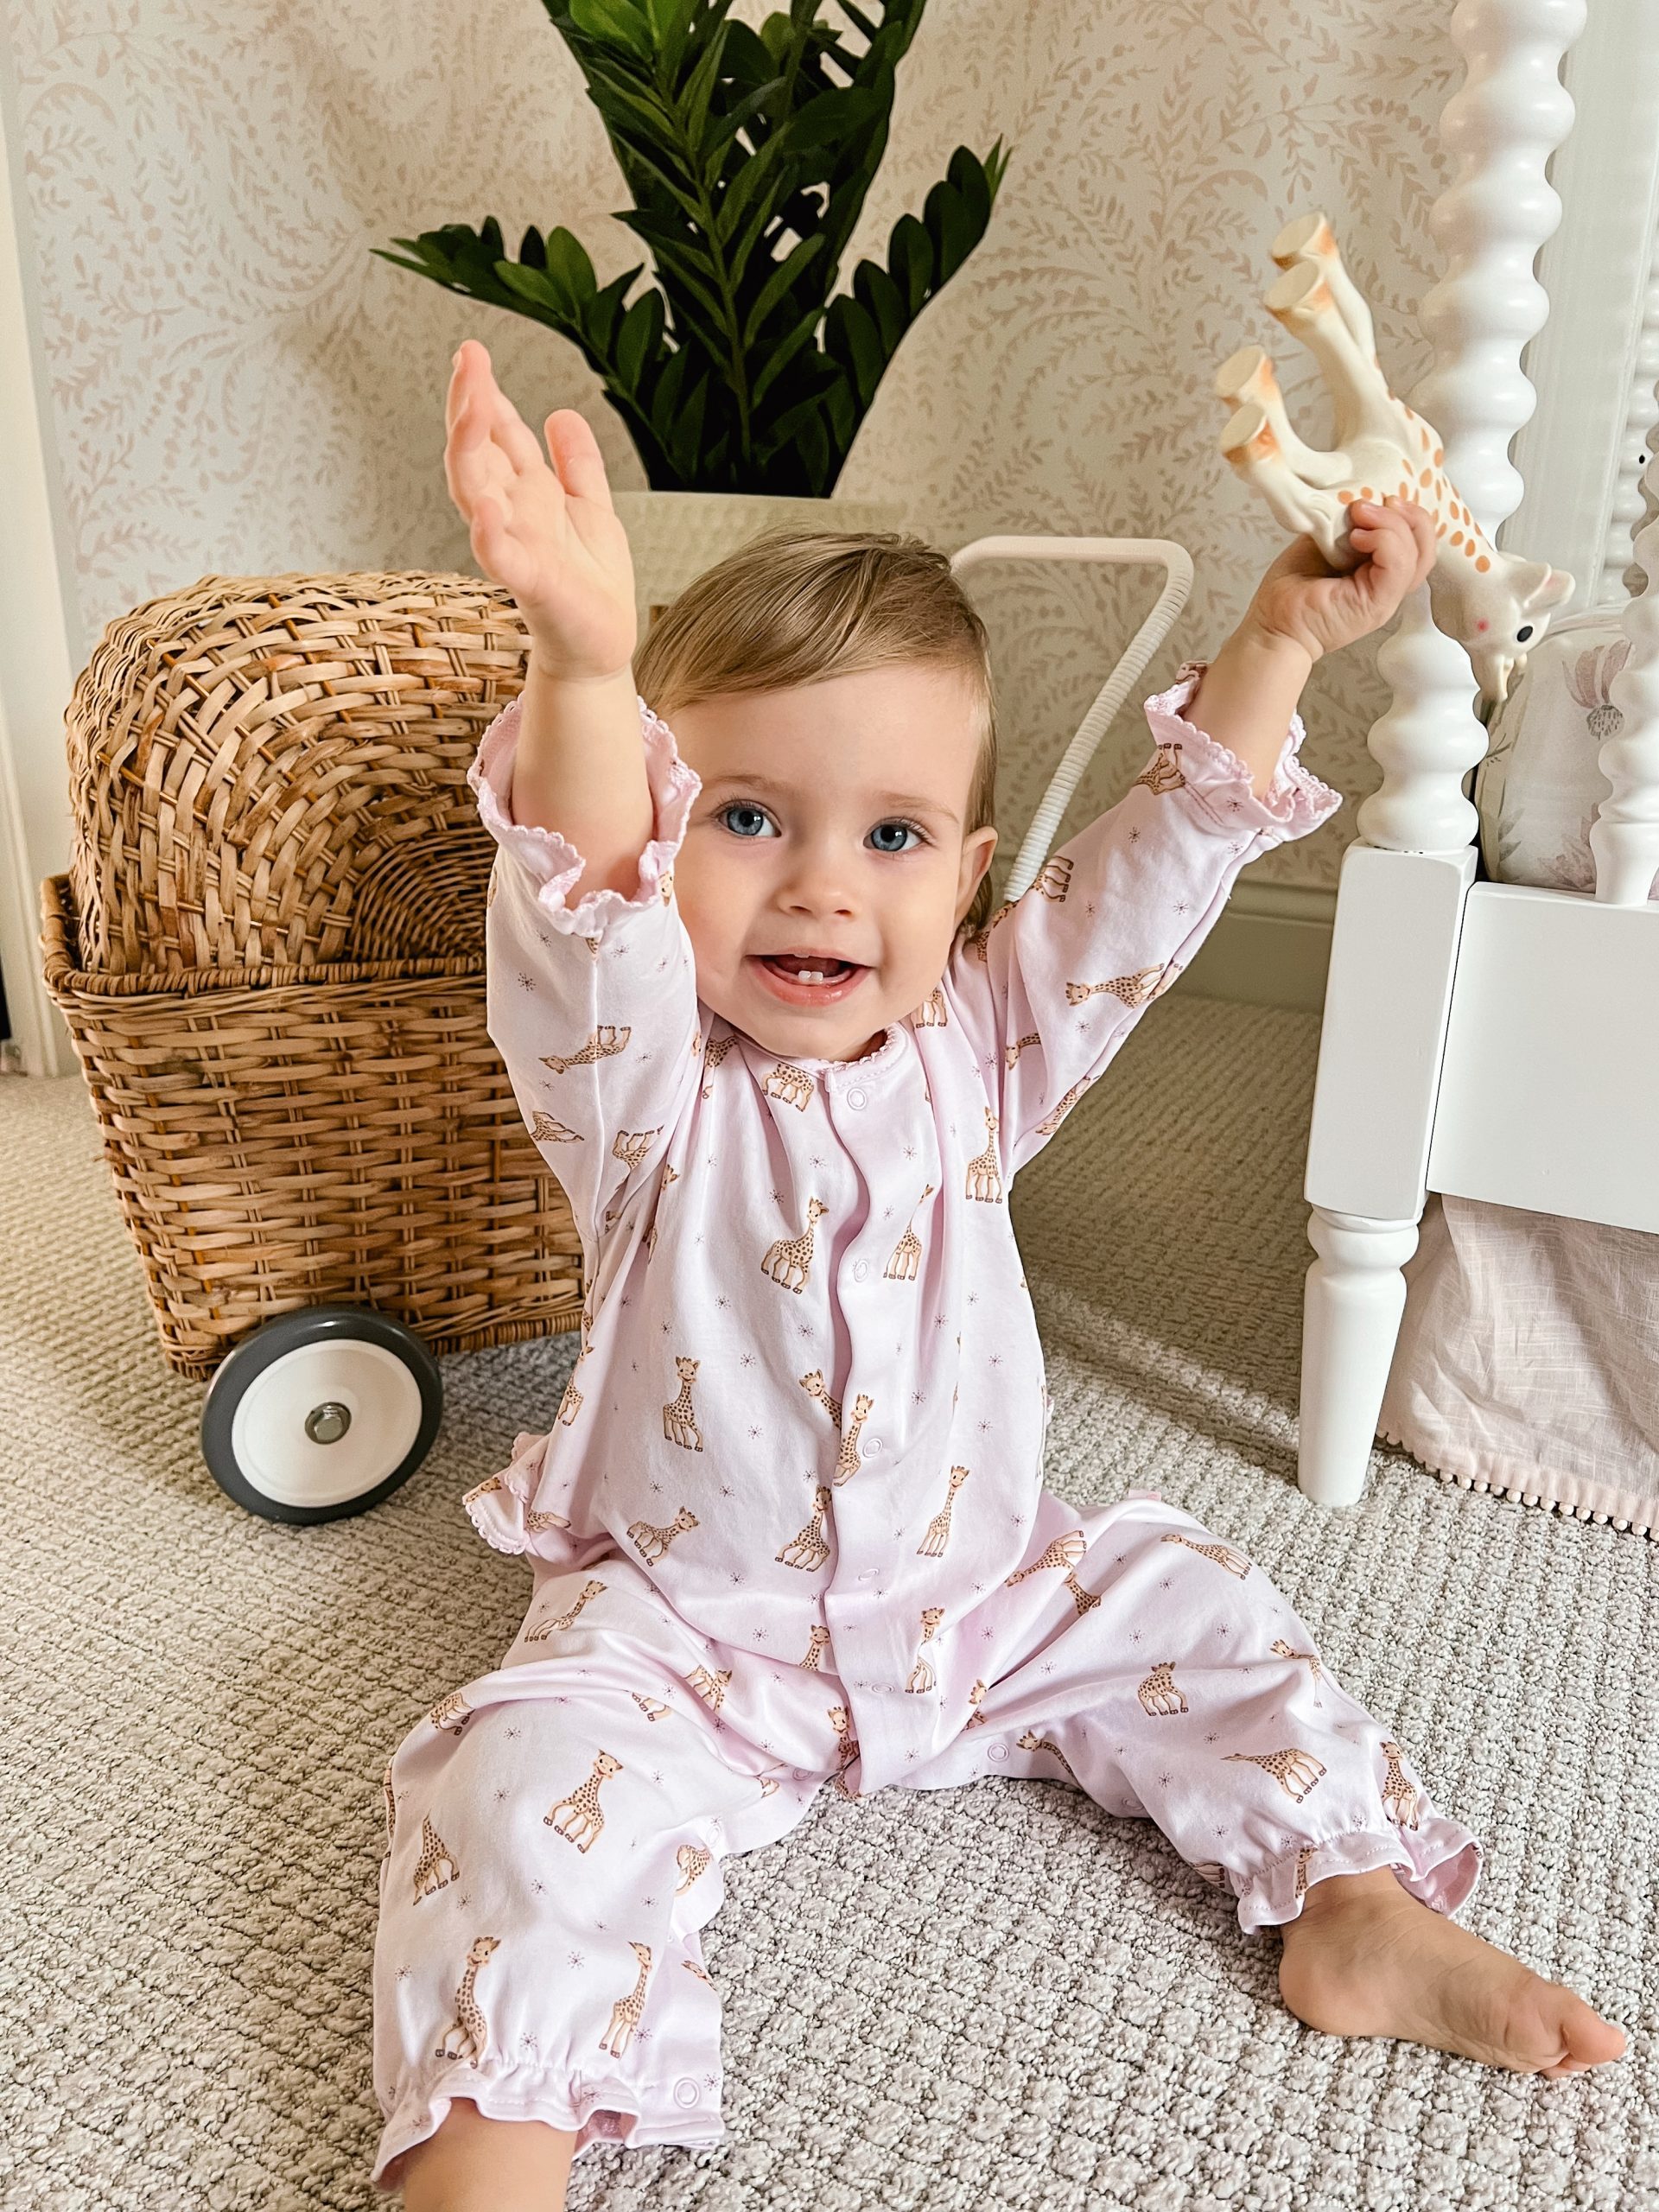 Baby Girl Clothing Haul, Wish List, Baby Product Giveaway